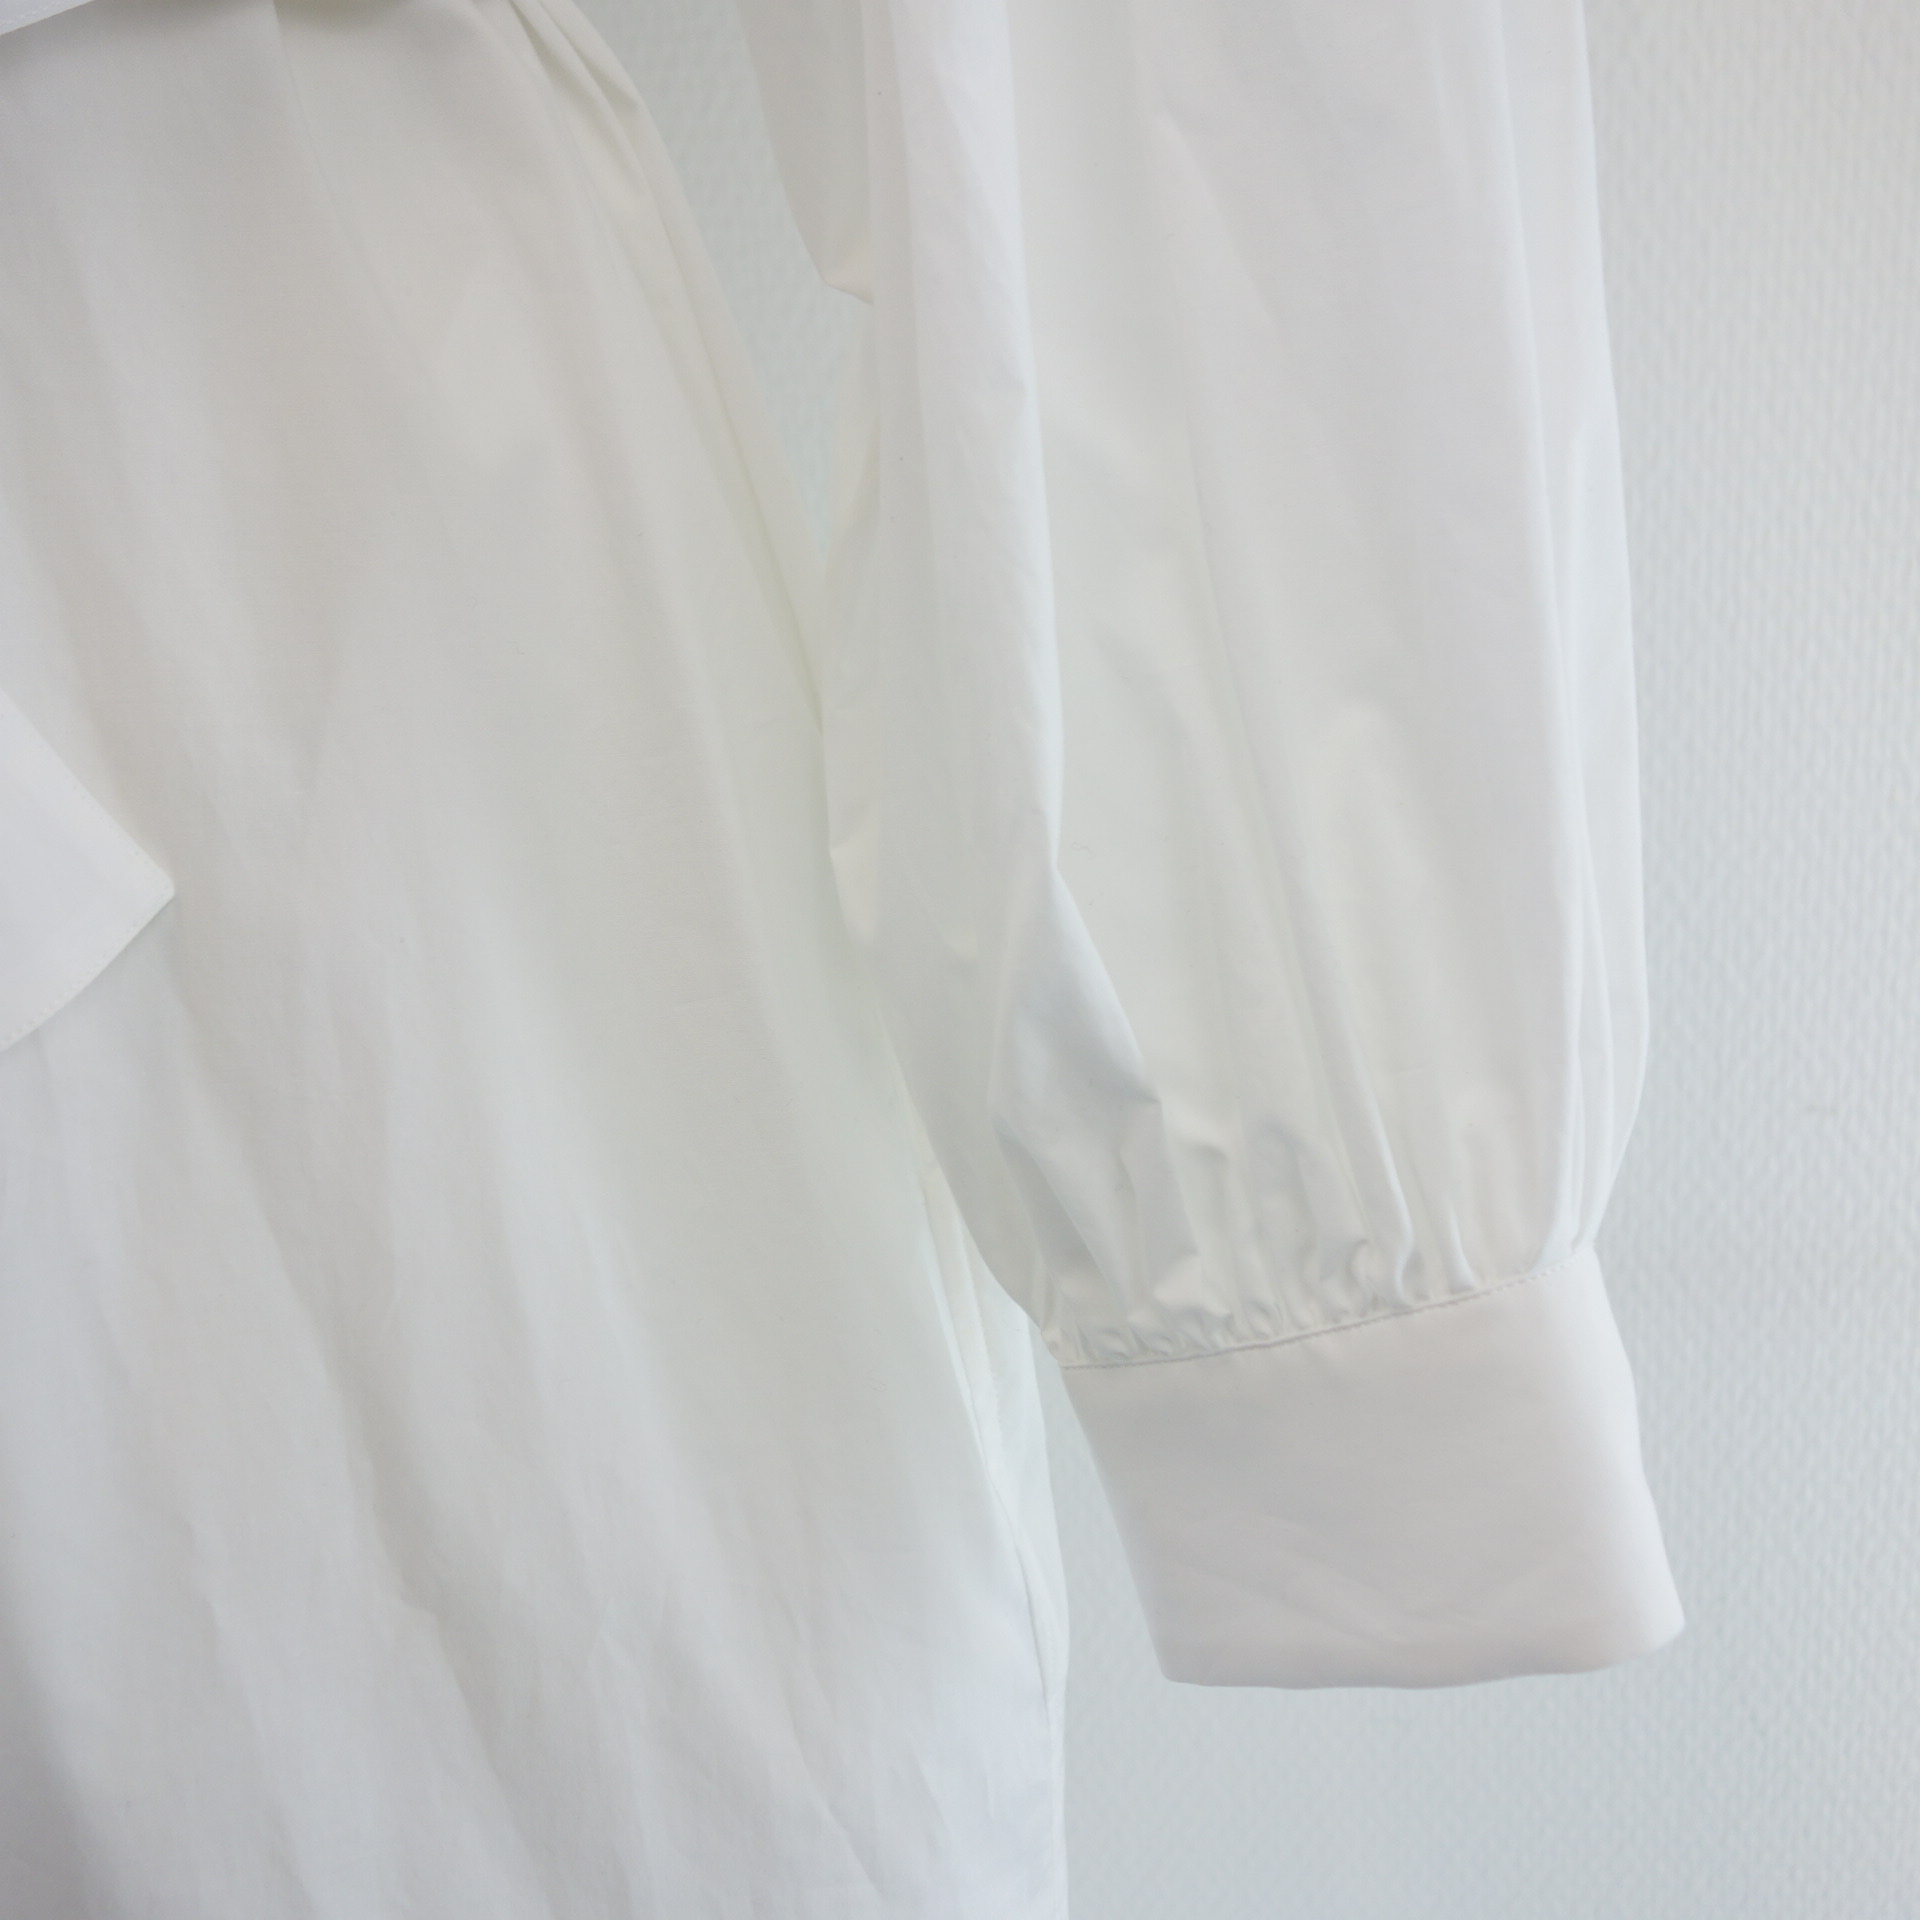 CALIBAN Damen Midi Kleid Tunika Tunikakleid Blusenkleid Hemdkleid Weiß mit Gürtel